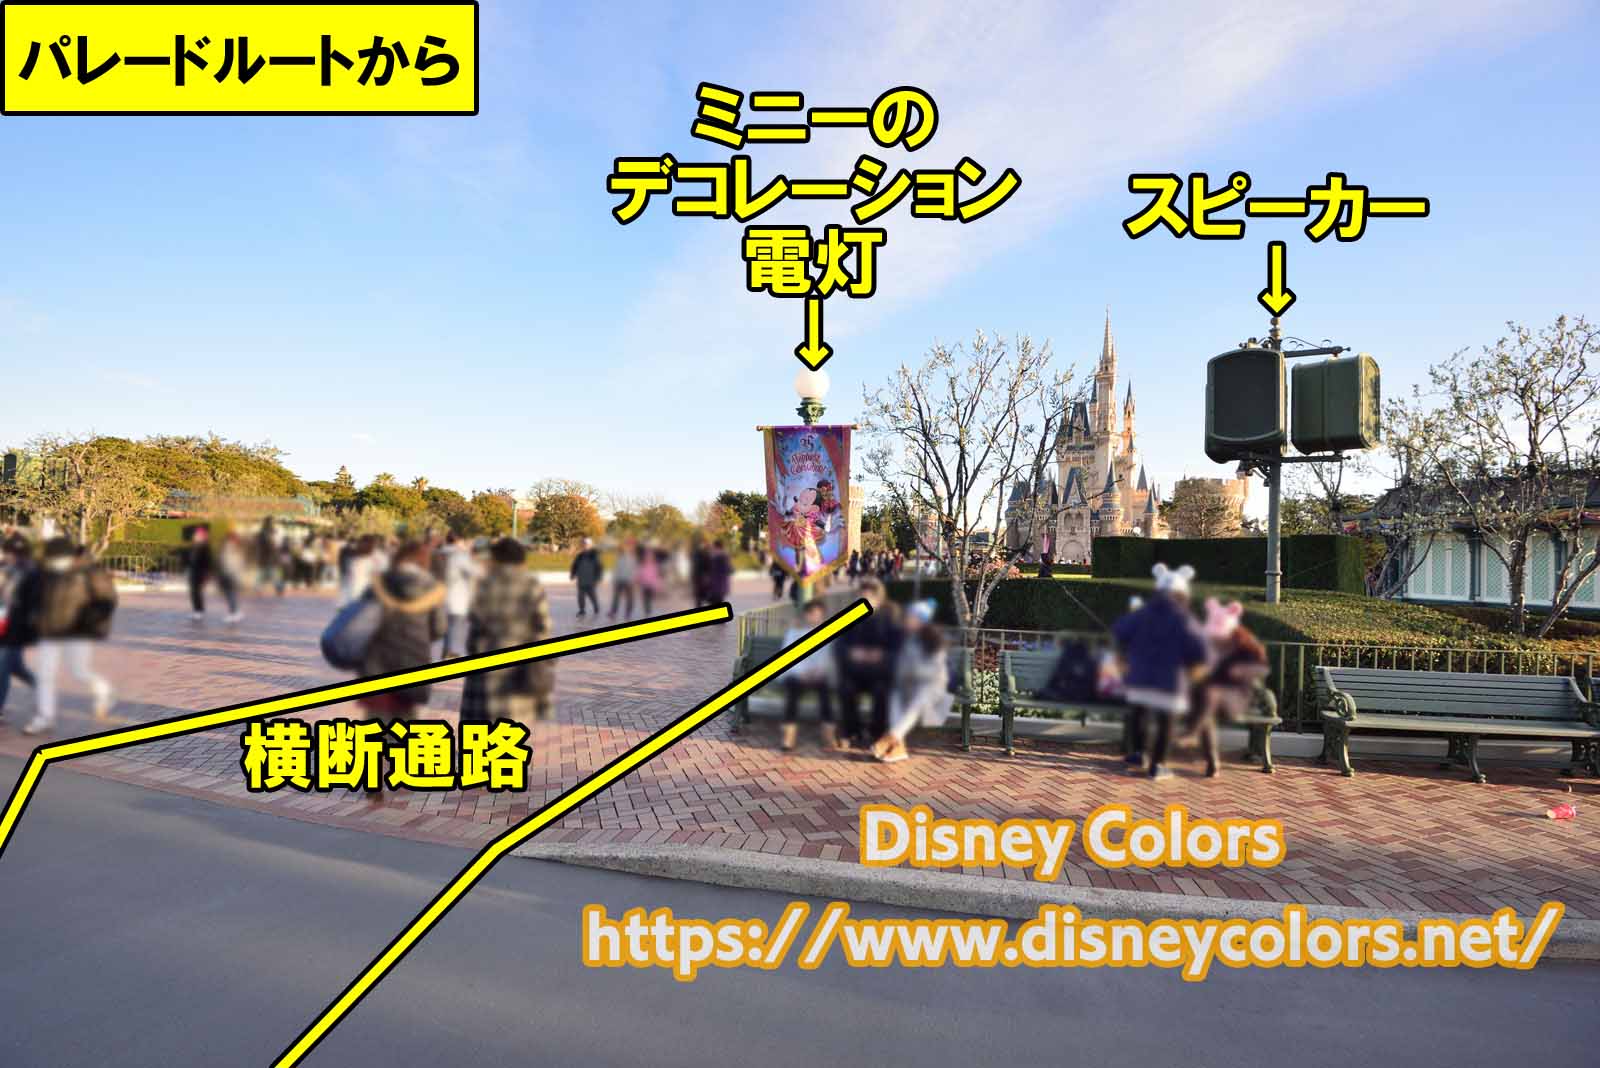 Tdl ドリーミング アップ スペシャルバージョン フロート停止位置 鑑賞ガイド Disney Colors